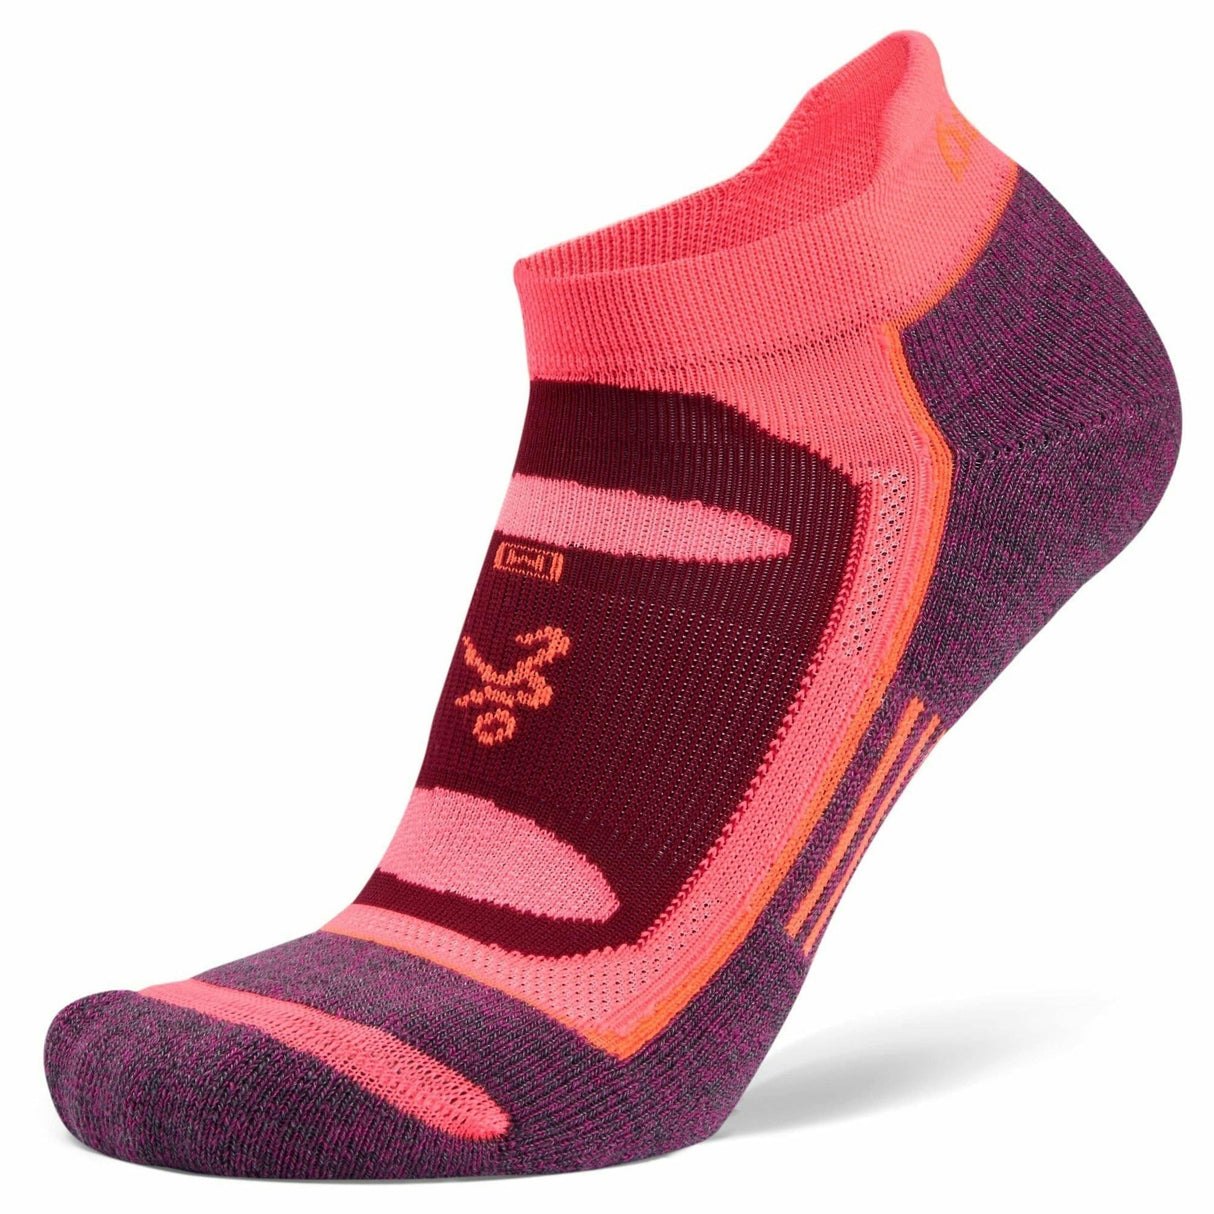 Balega Blister Resist No Show Socks - Clearance  -  Medium / Pink/Purple